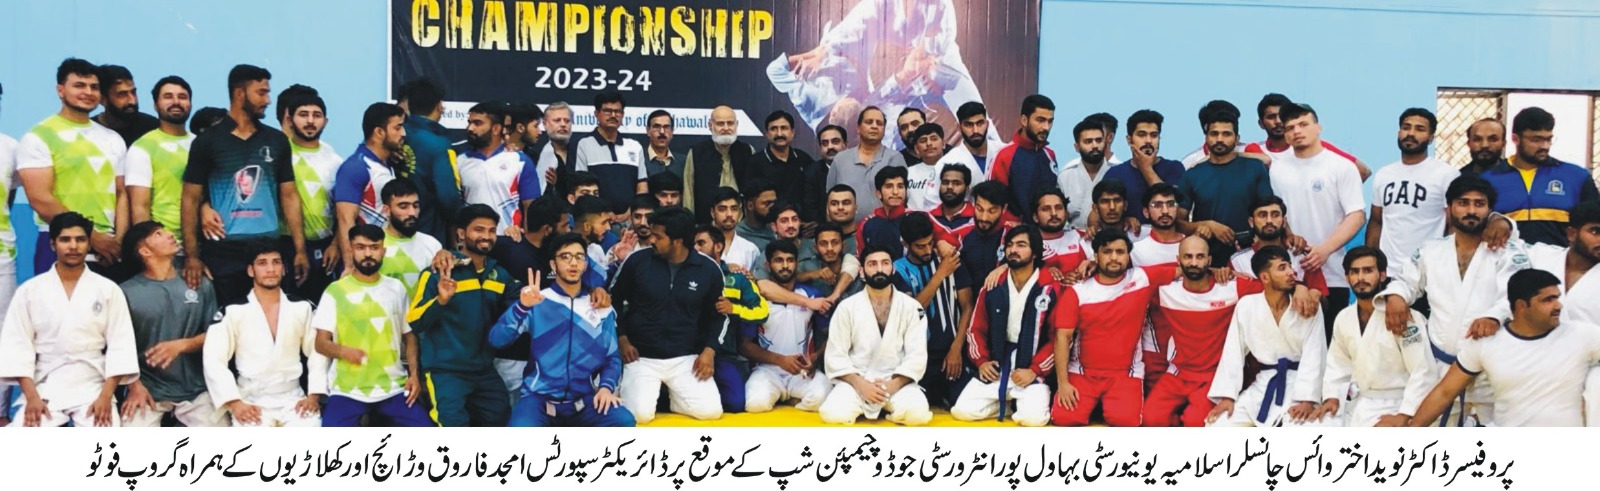 HEC Judo championship 2024 urdu 1